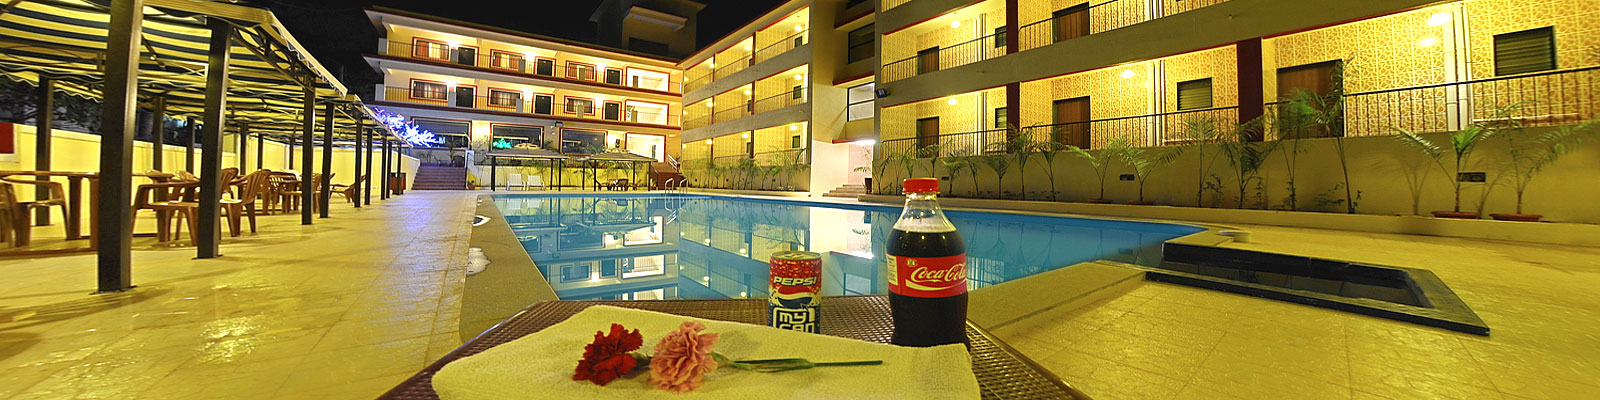 Hotel resort in North Goa | Swimming Pool | Pub | Bar | Discotheque ...